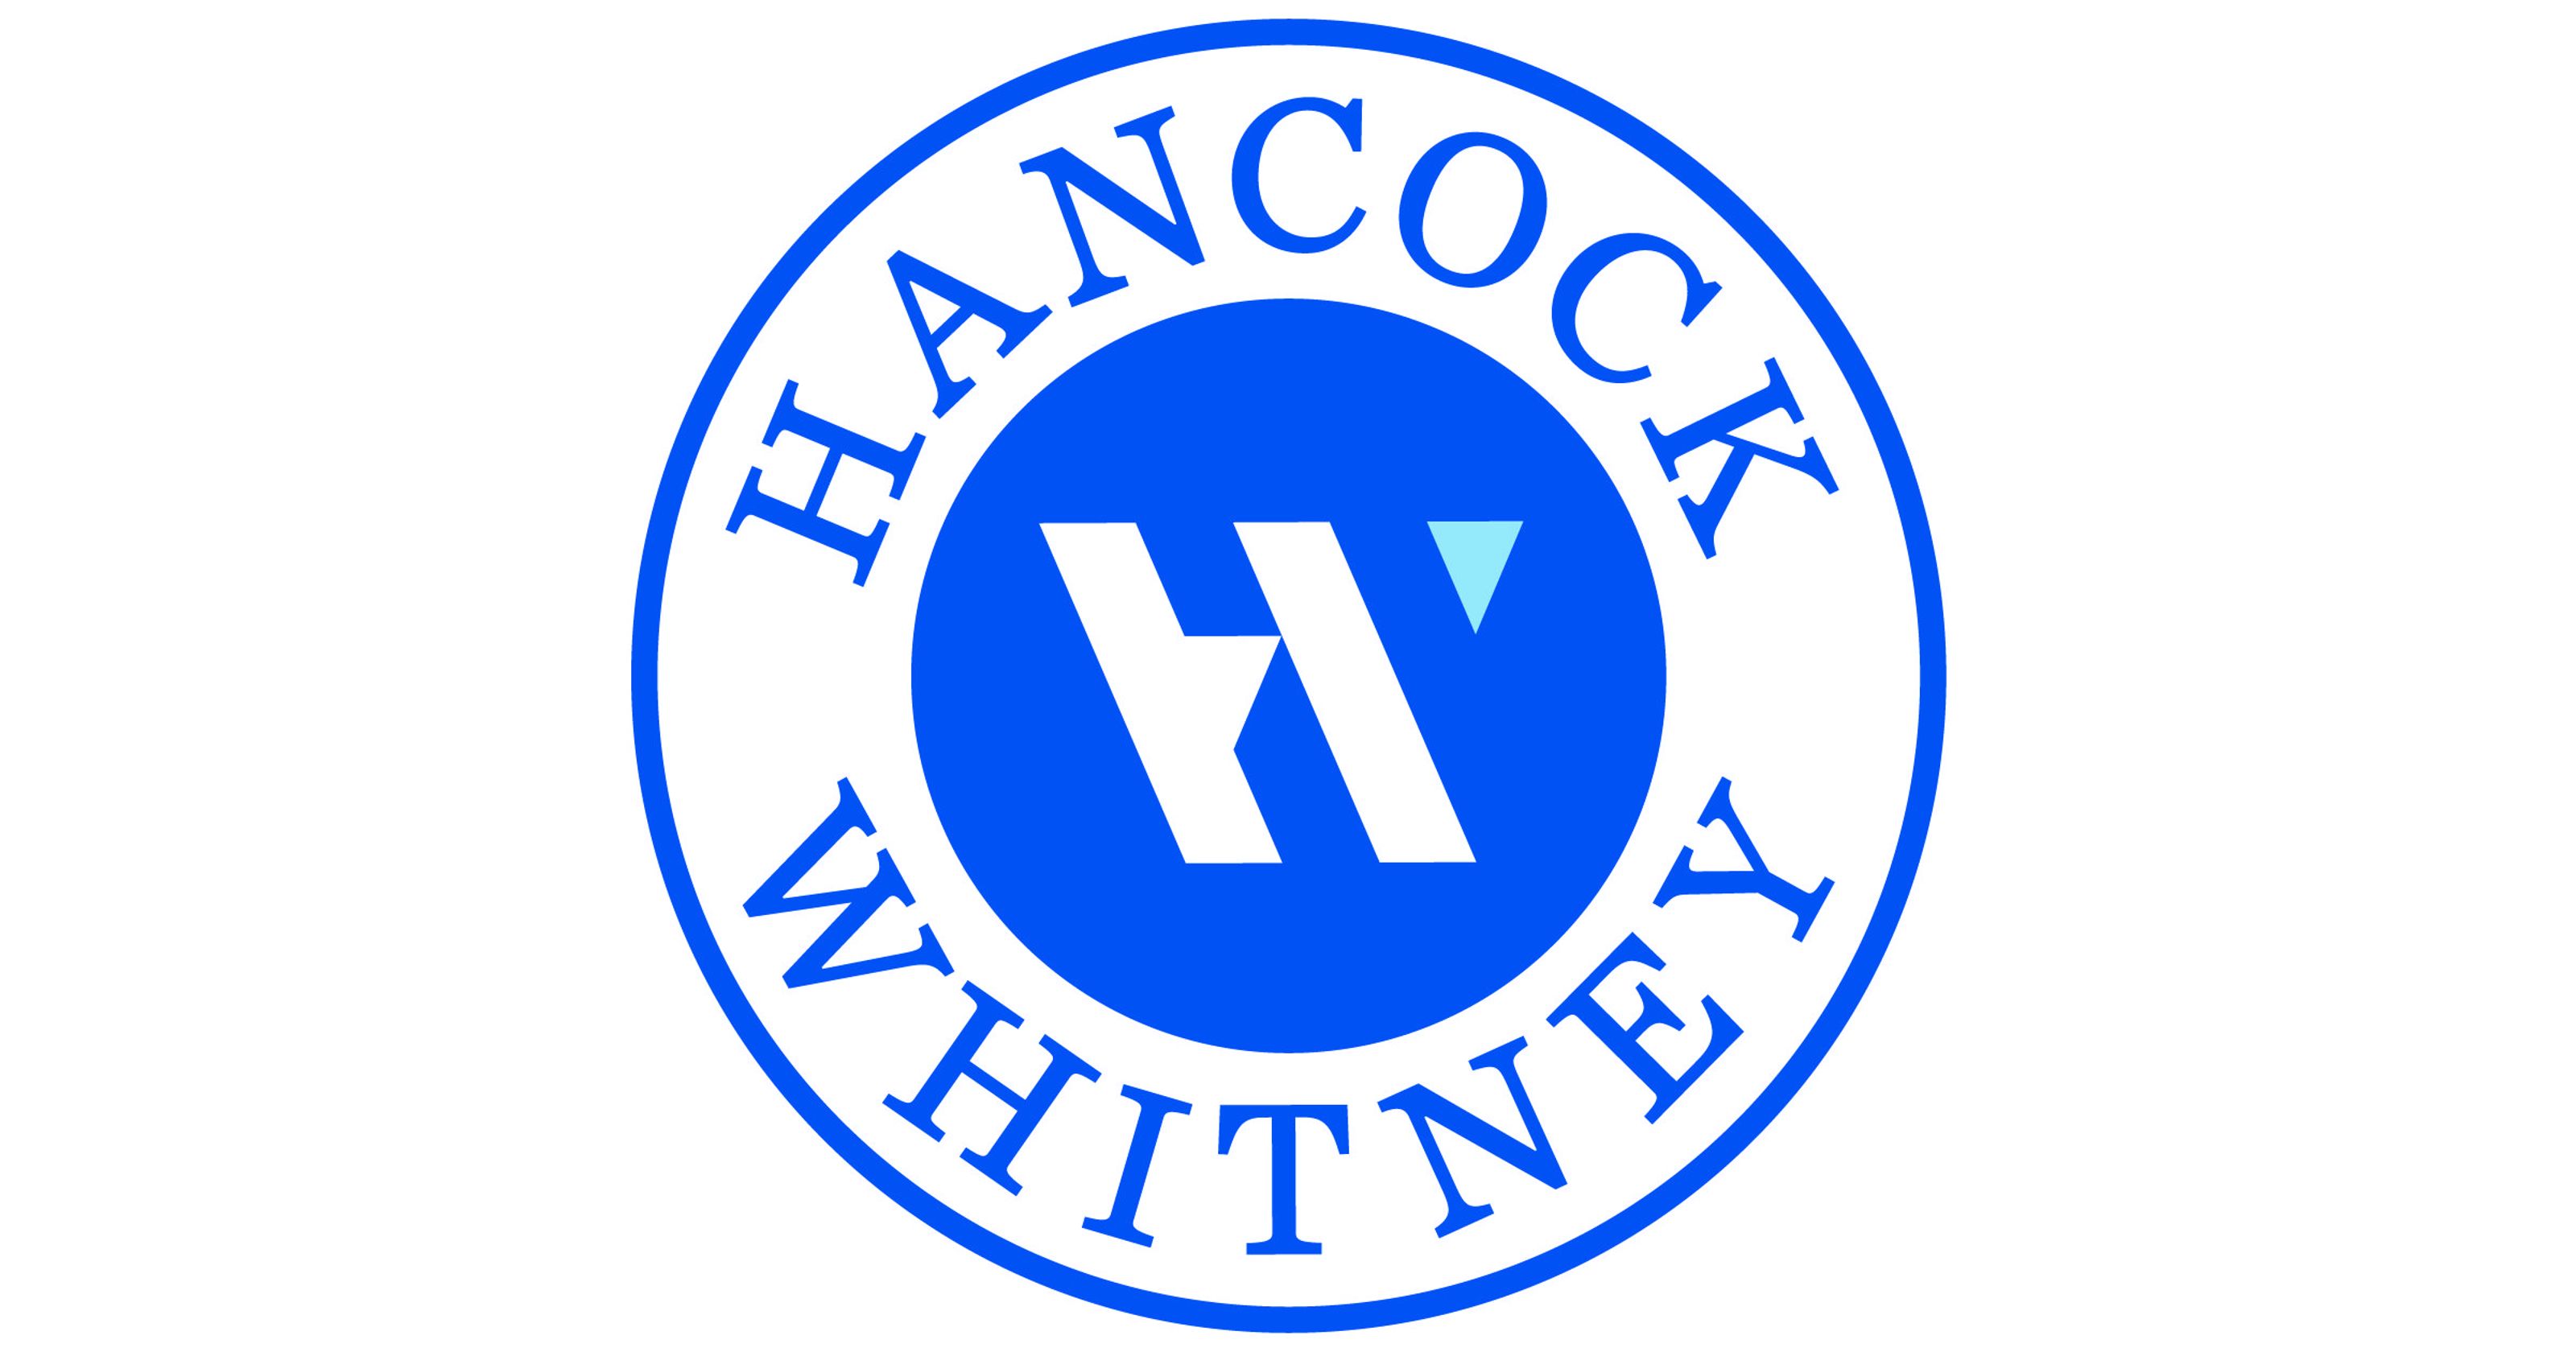 Whitney Bank logo